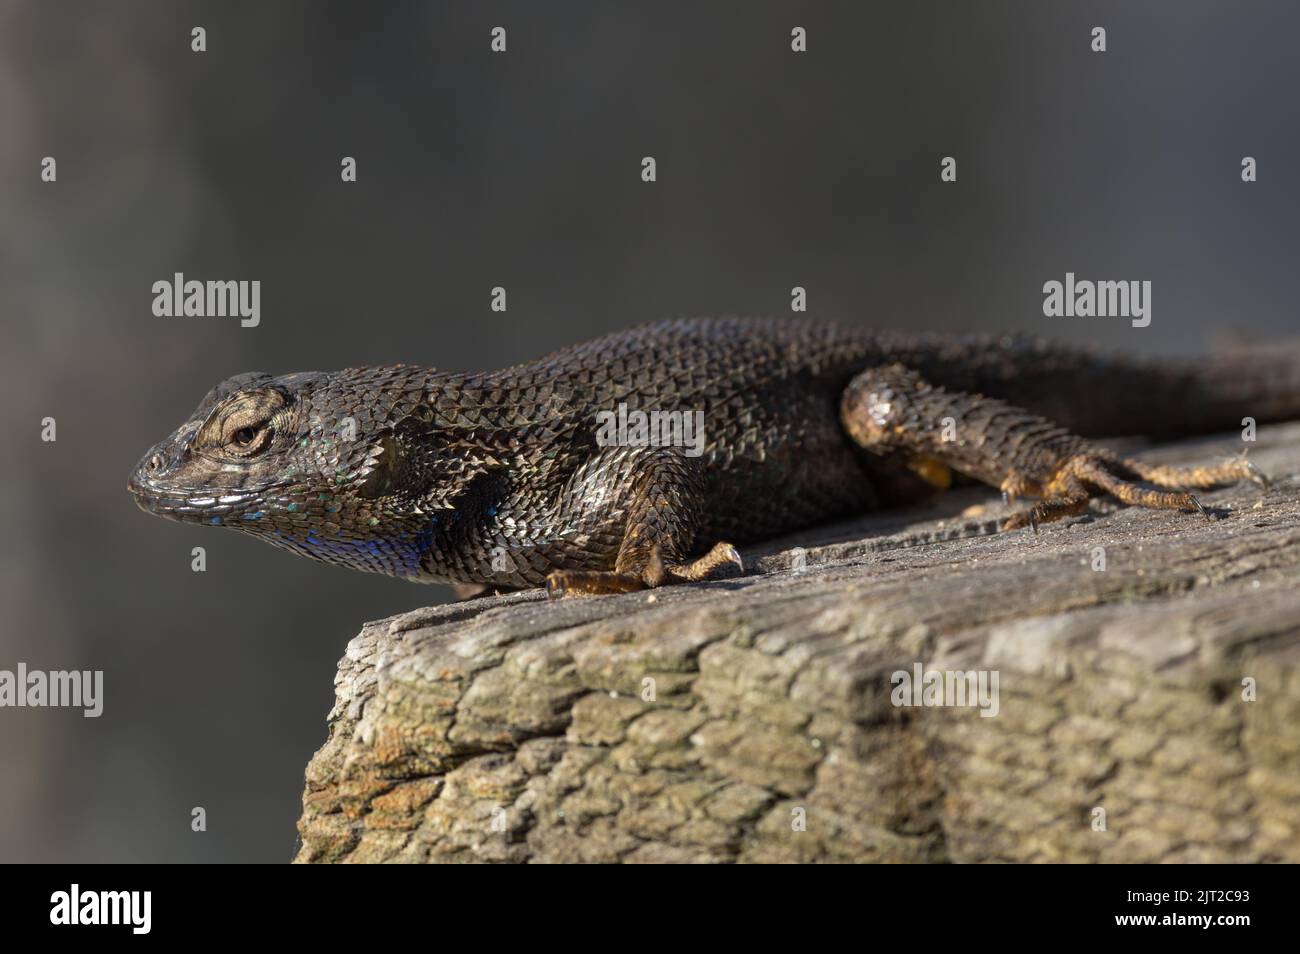 Spiny lizard, Sceloporus, shown on a dead wood. Photo taken in Arcadia, Southern California. Stock Photo